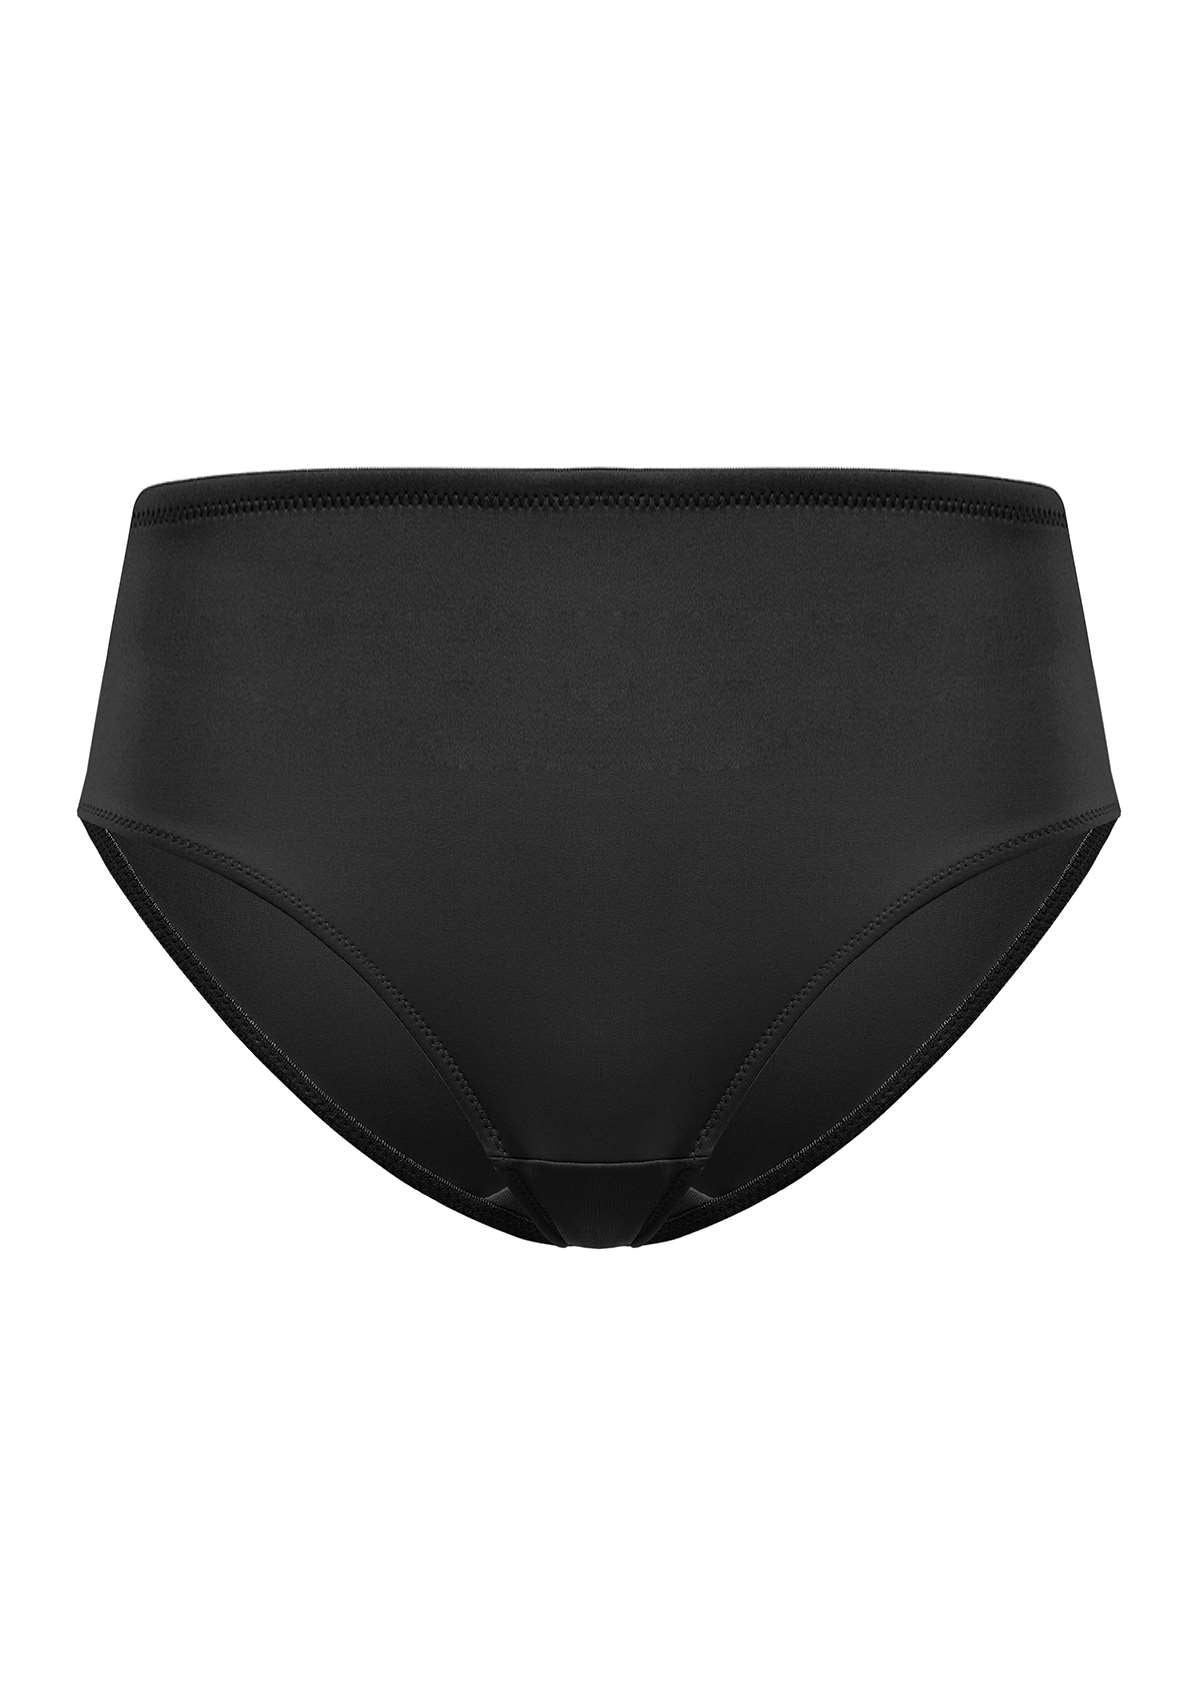 HSIA Patricia Smooth Soft Stretch Comfort High-Rise Brief Underwear - XXXL / Black